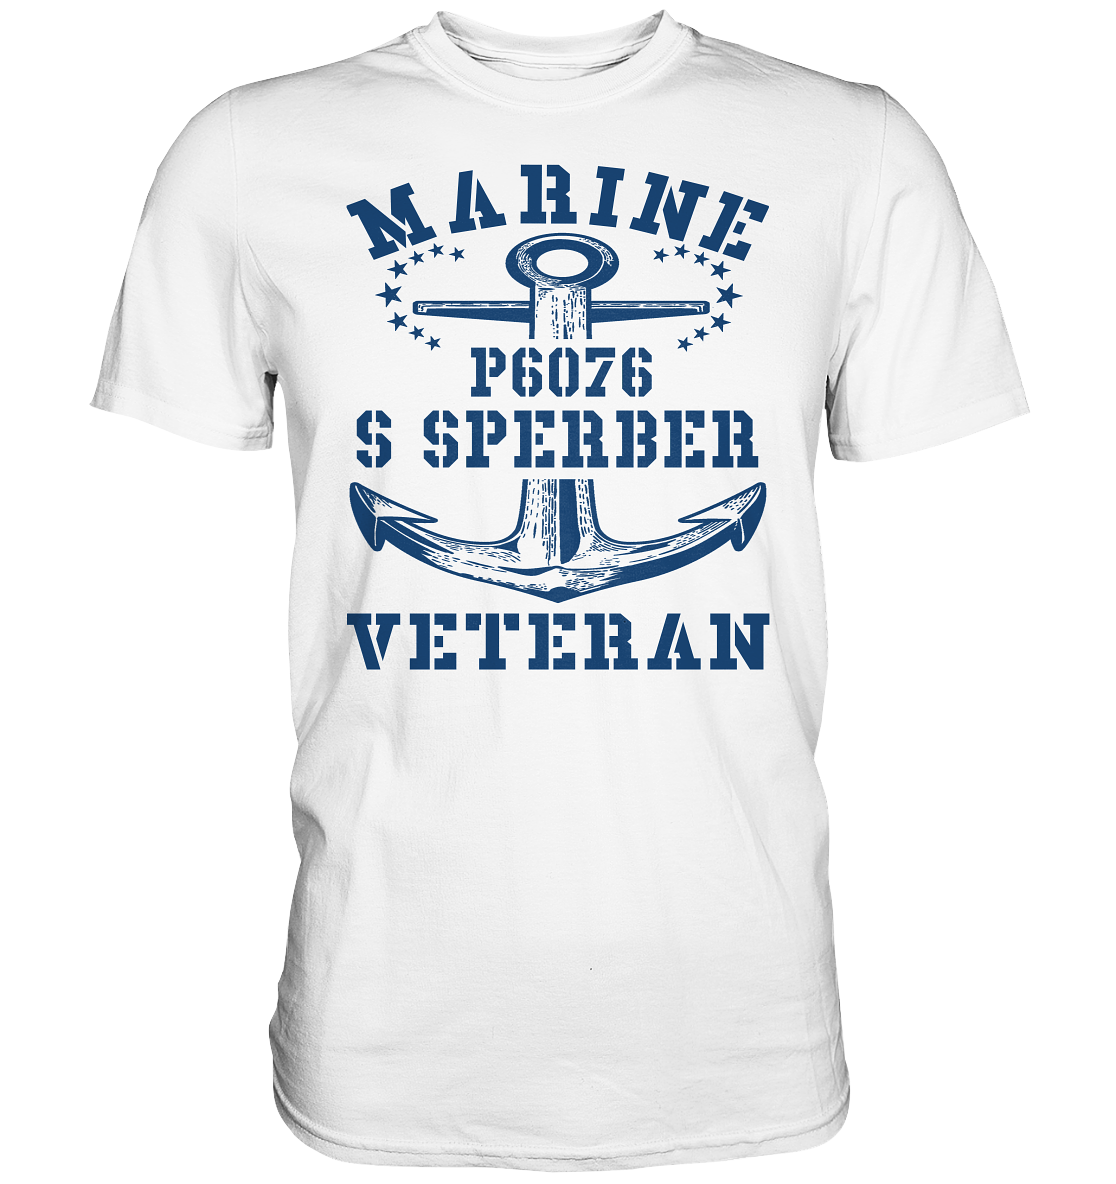 P6076 S SPERBER Marine Veteran - Premium Shirt